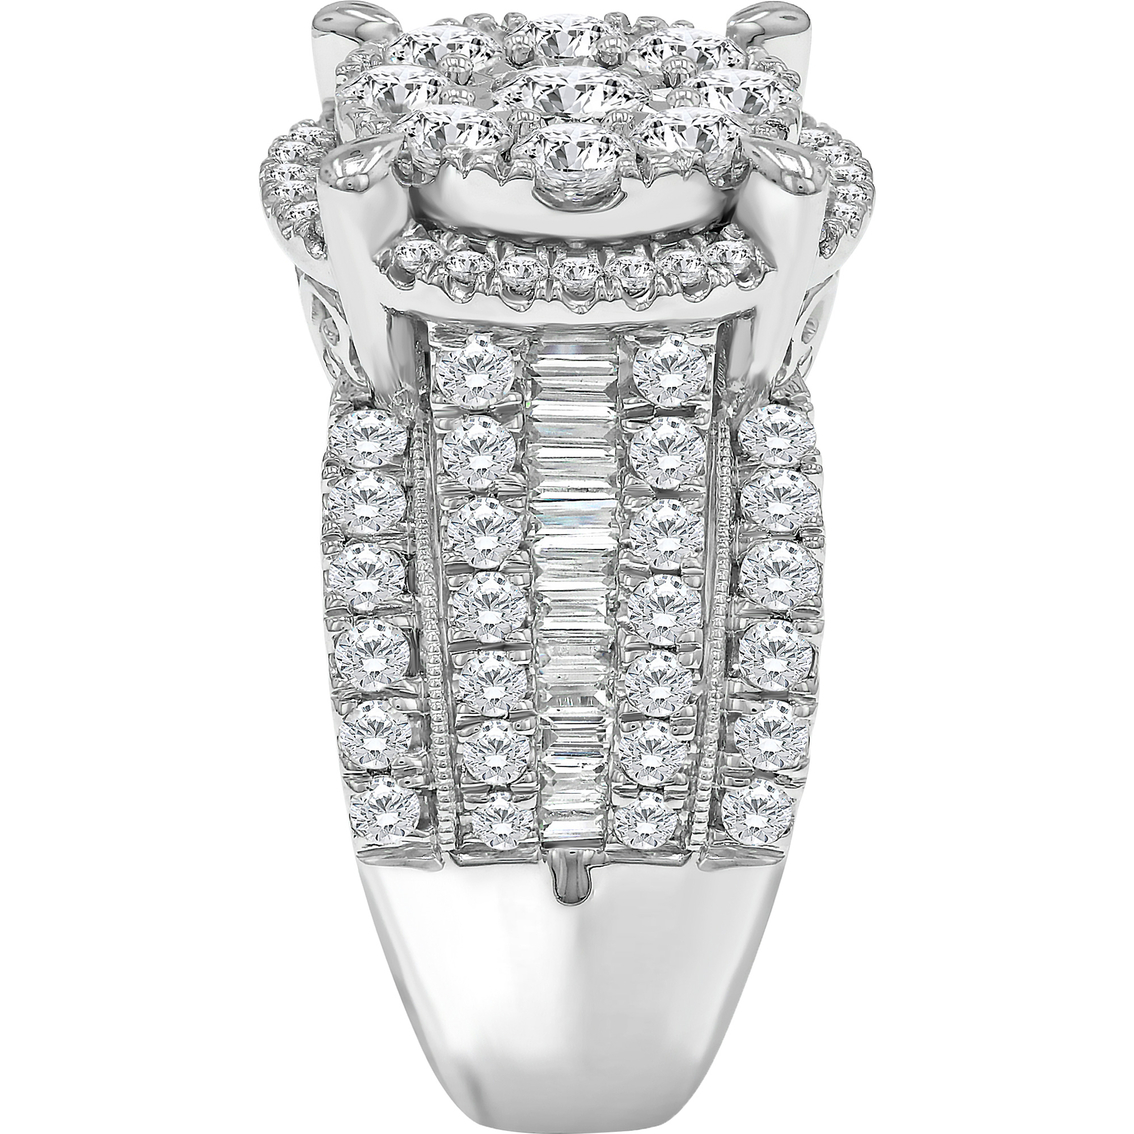 10K White Gold 3 CTW Diamond Ring Size 7 - Image 3 of 4